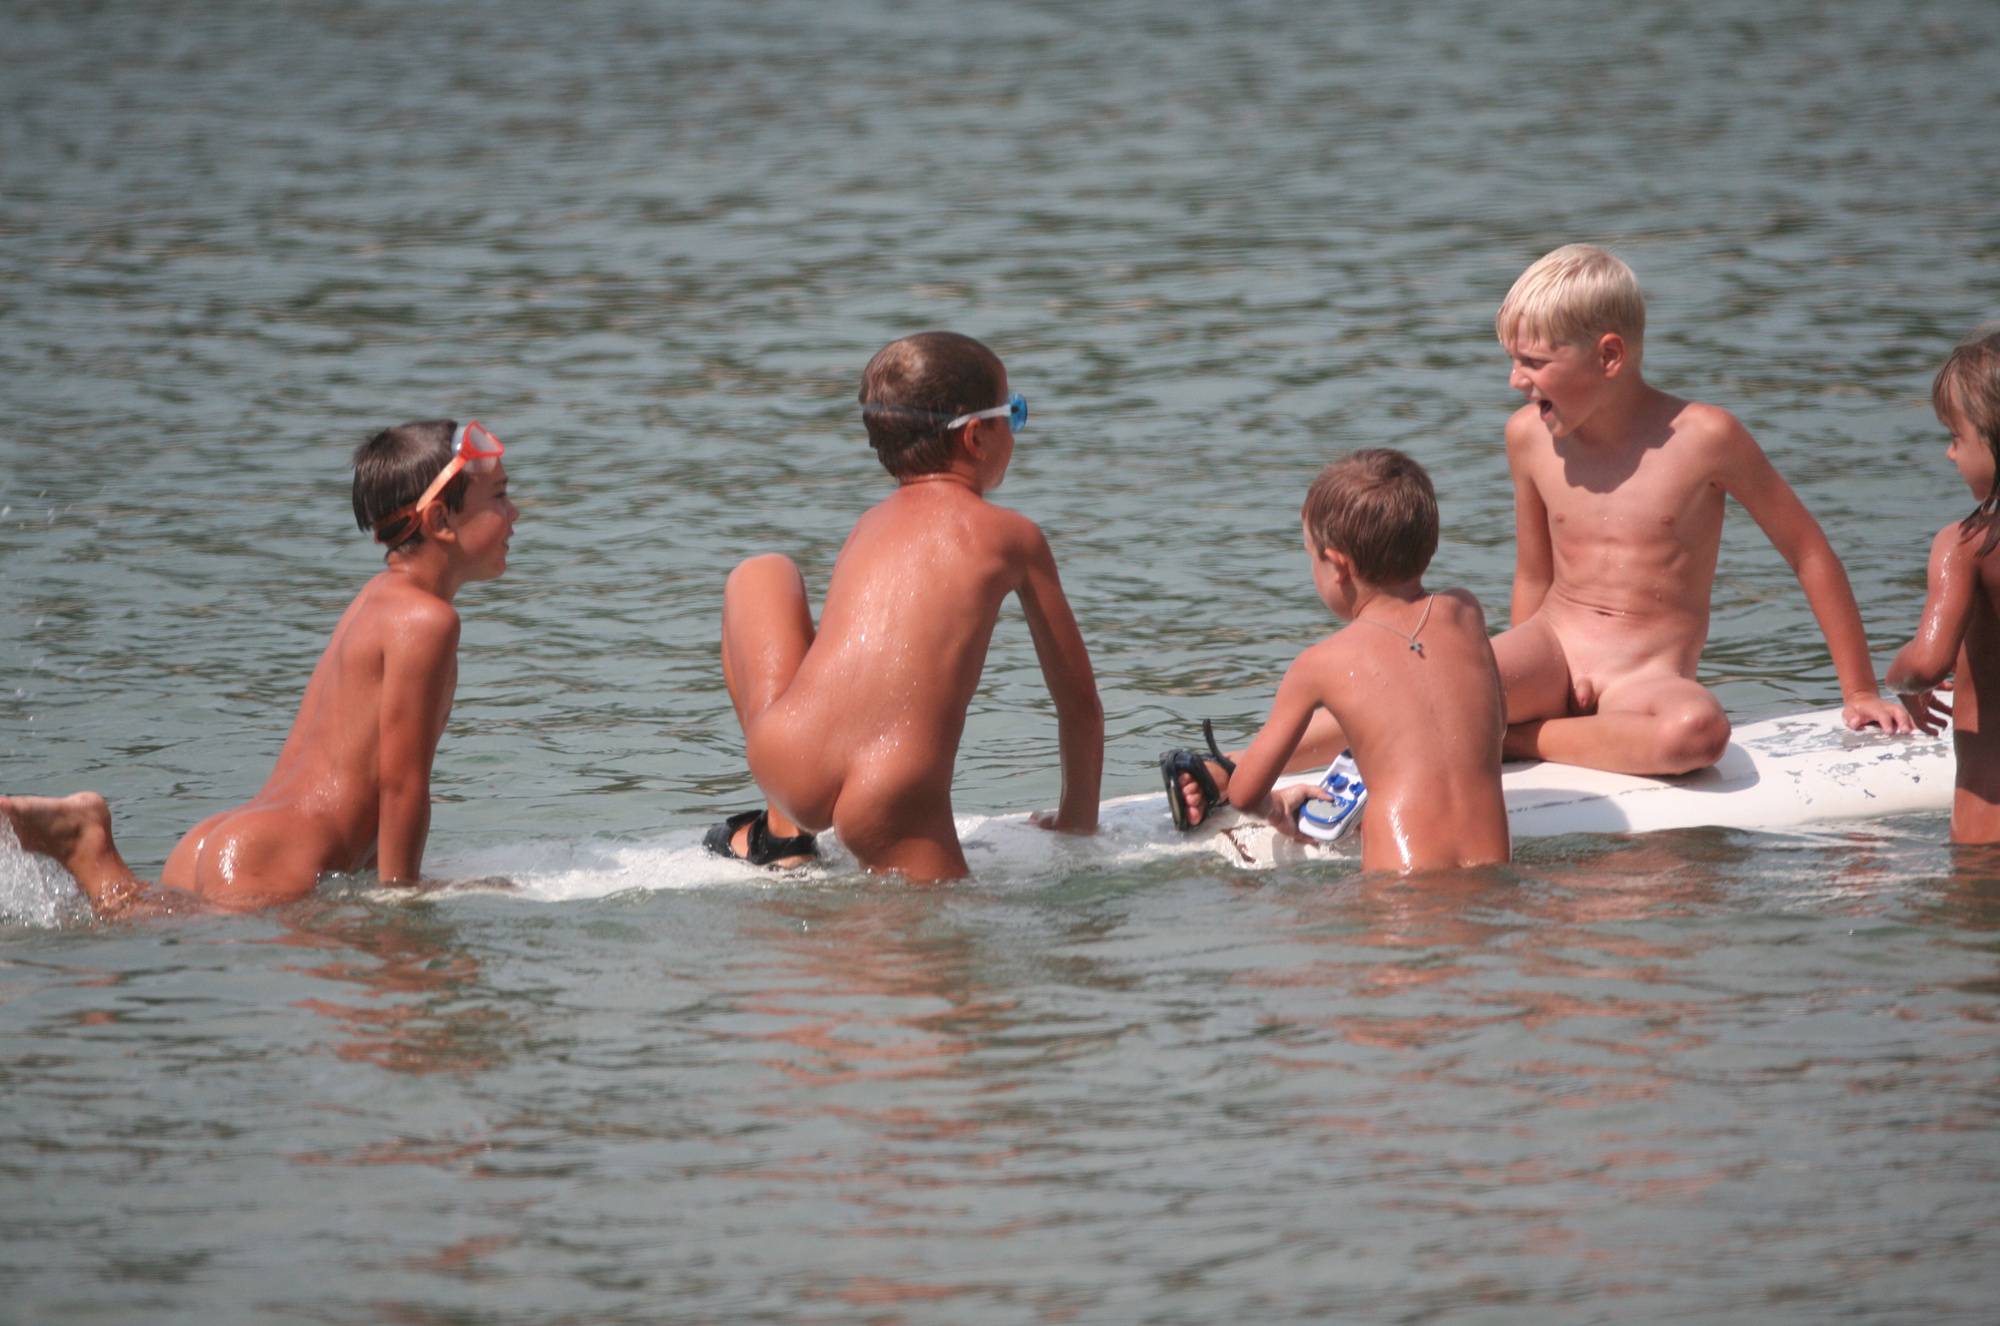 Several Kids On Surfboard - 1